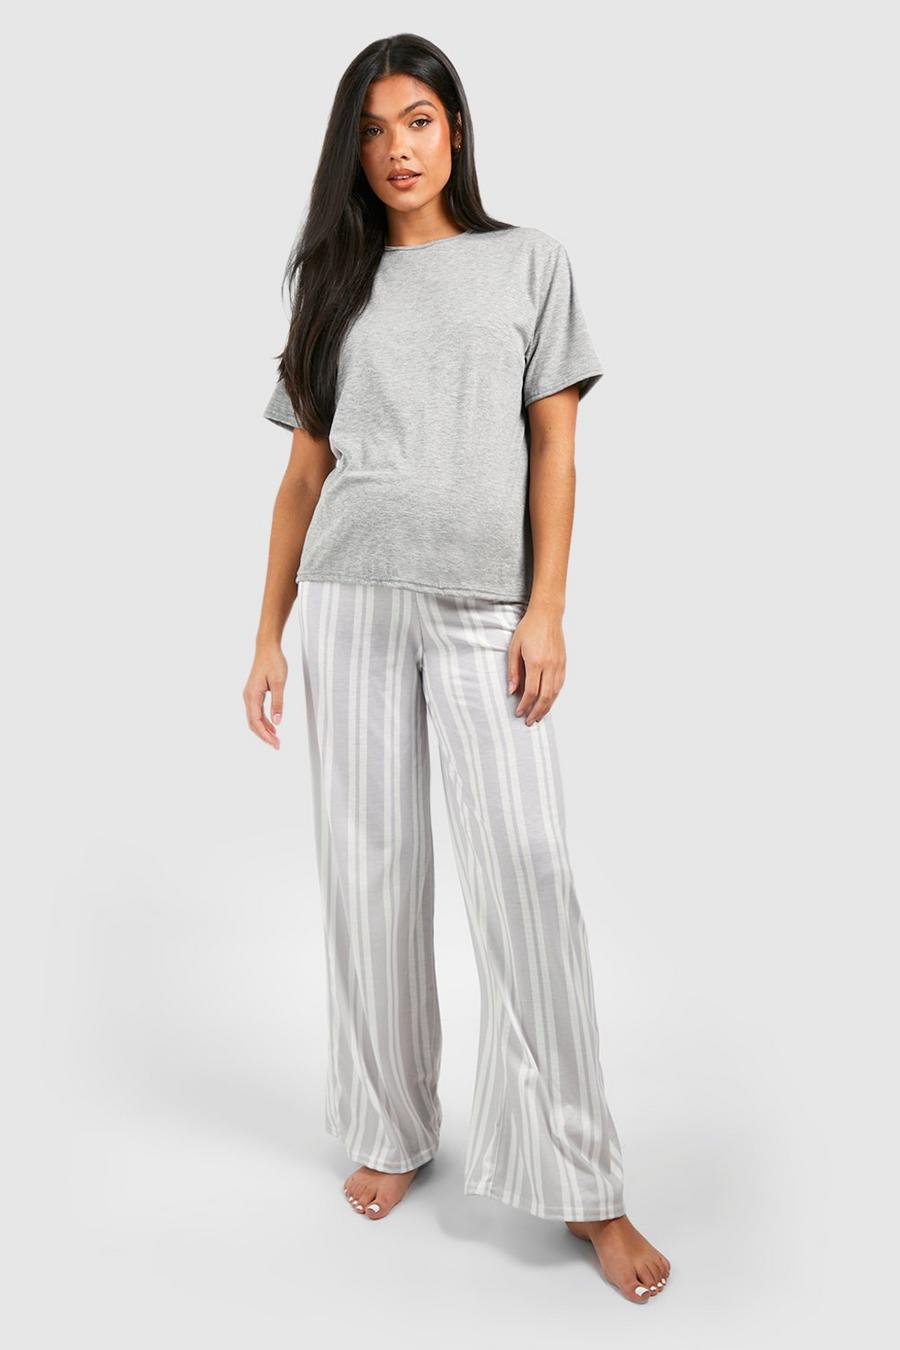 Grey marl Maternity Stripe Pajama Set